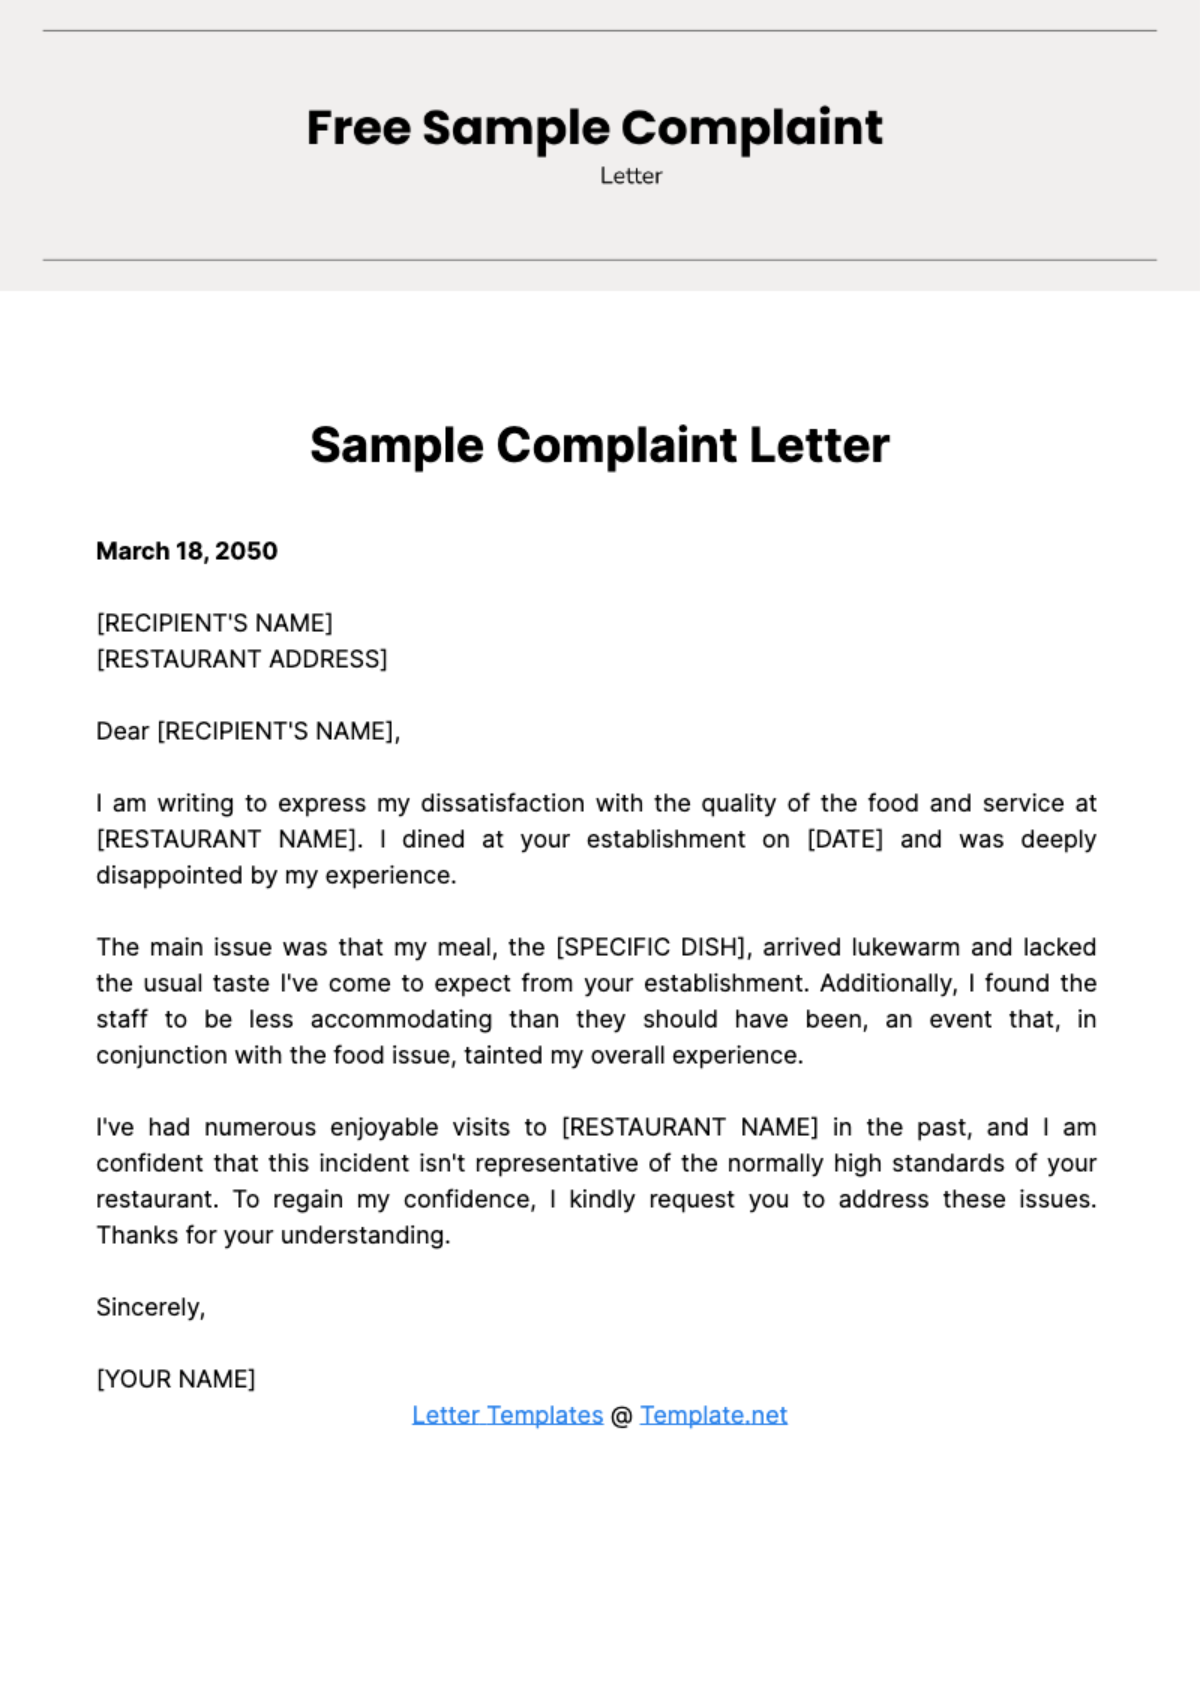 Sample Complaint Letter Template